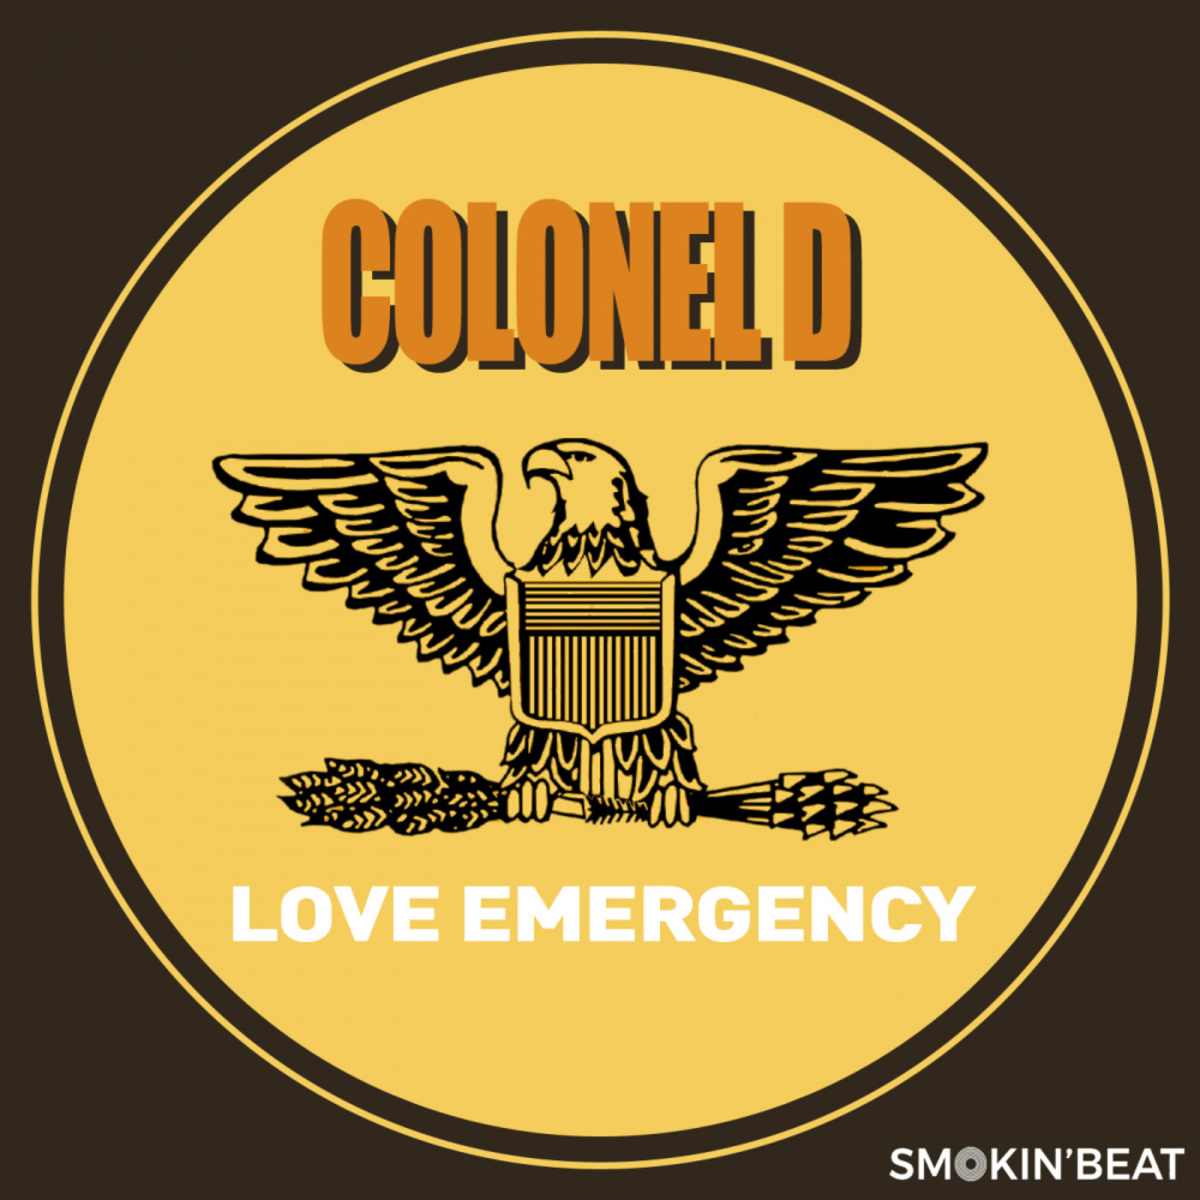 Colonel D - Love Emergency / Smokin' Beat